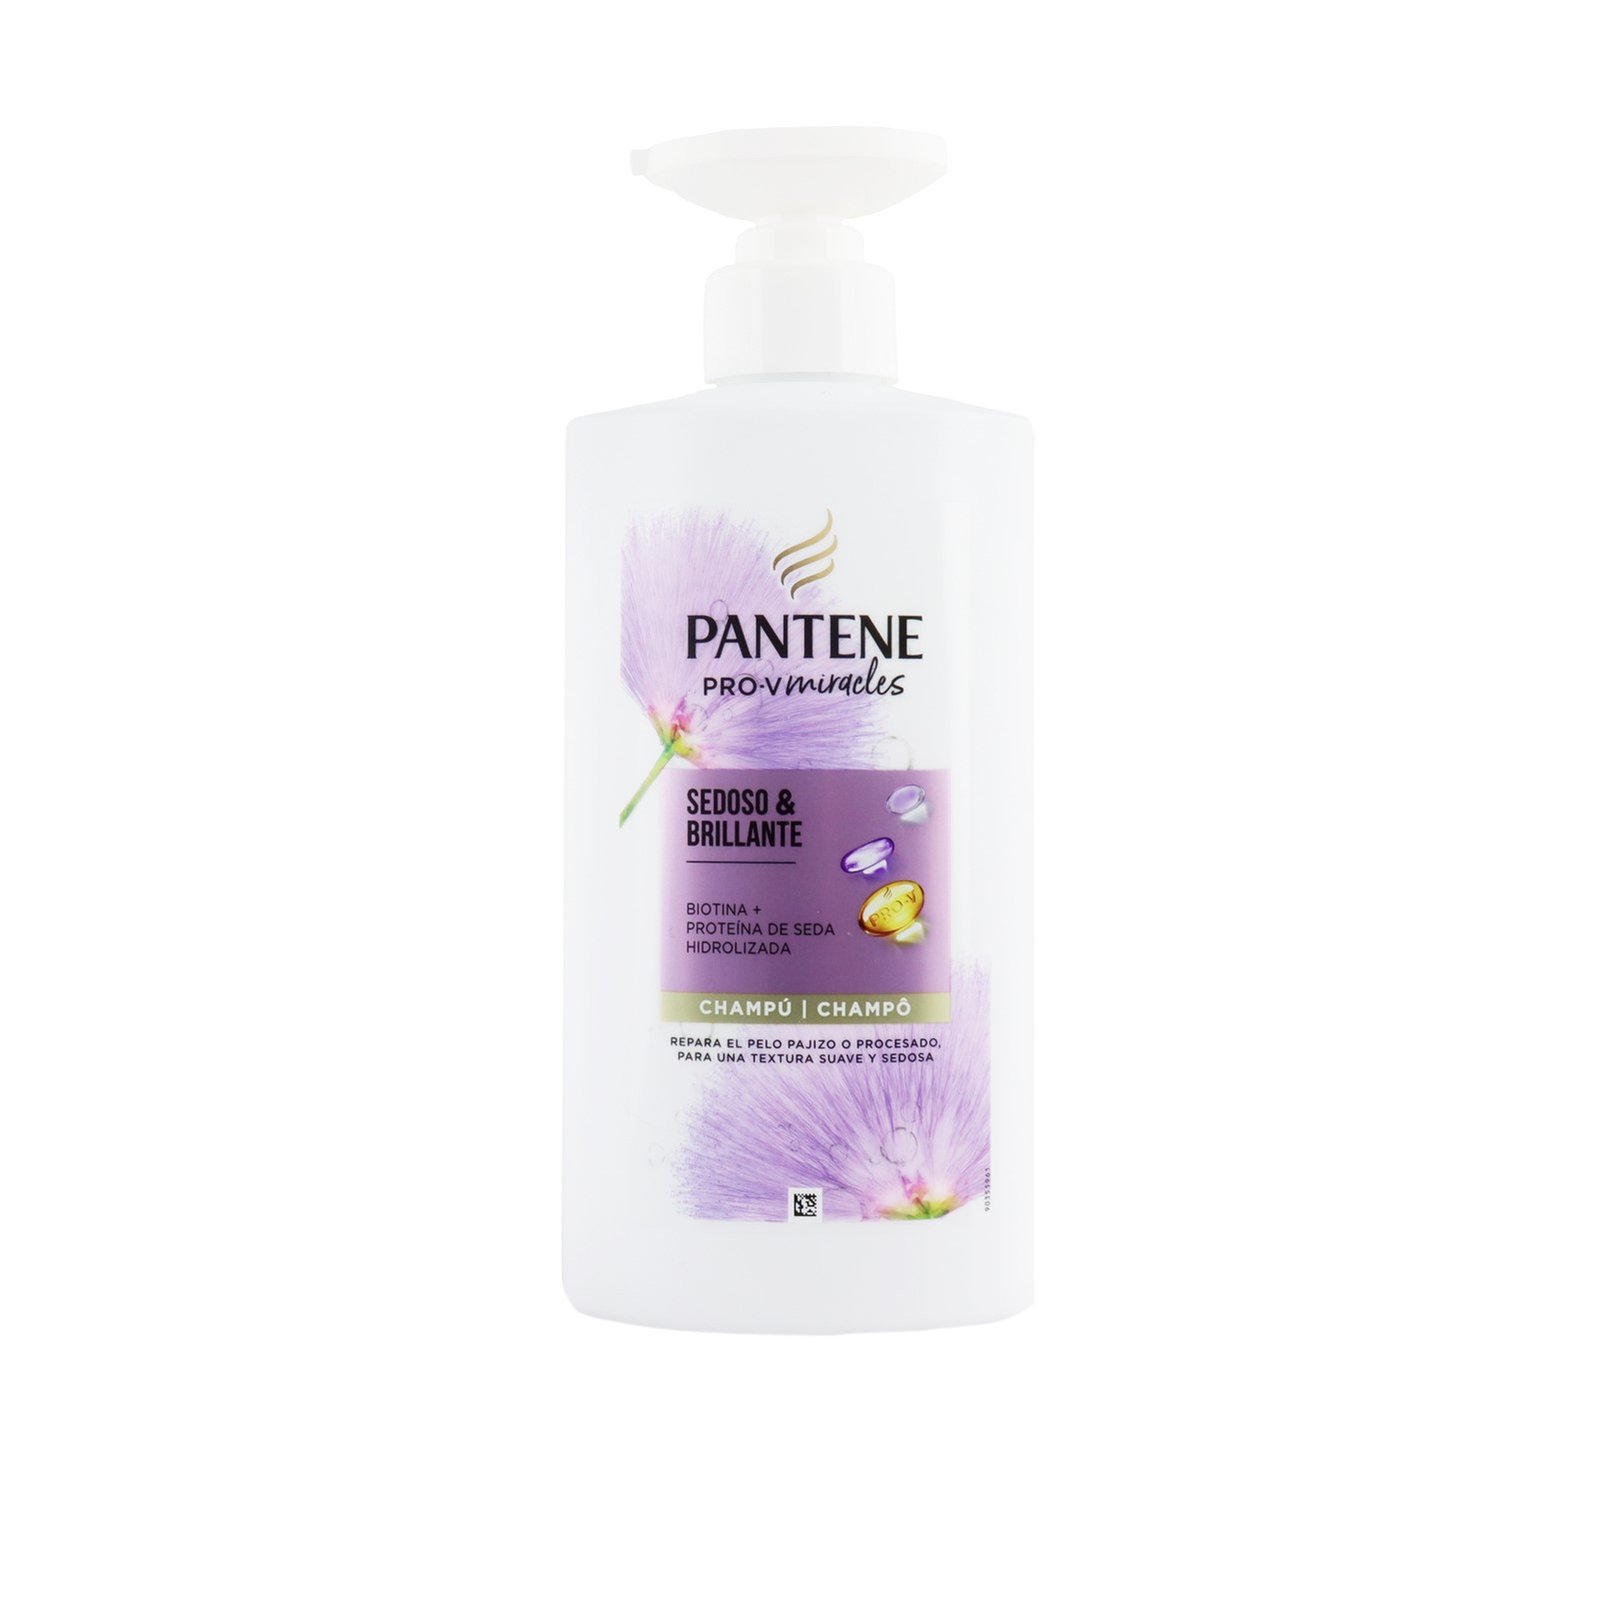 Pantene Pro-V Miracles Silky & Glowing Shampoo 500ml (16.9 fl oz)